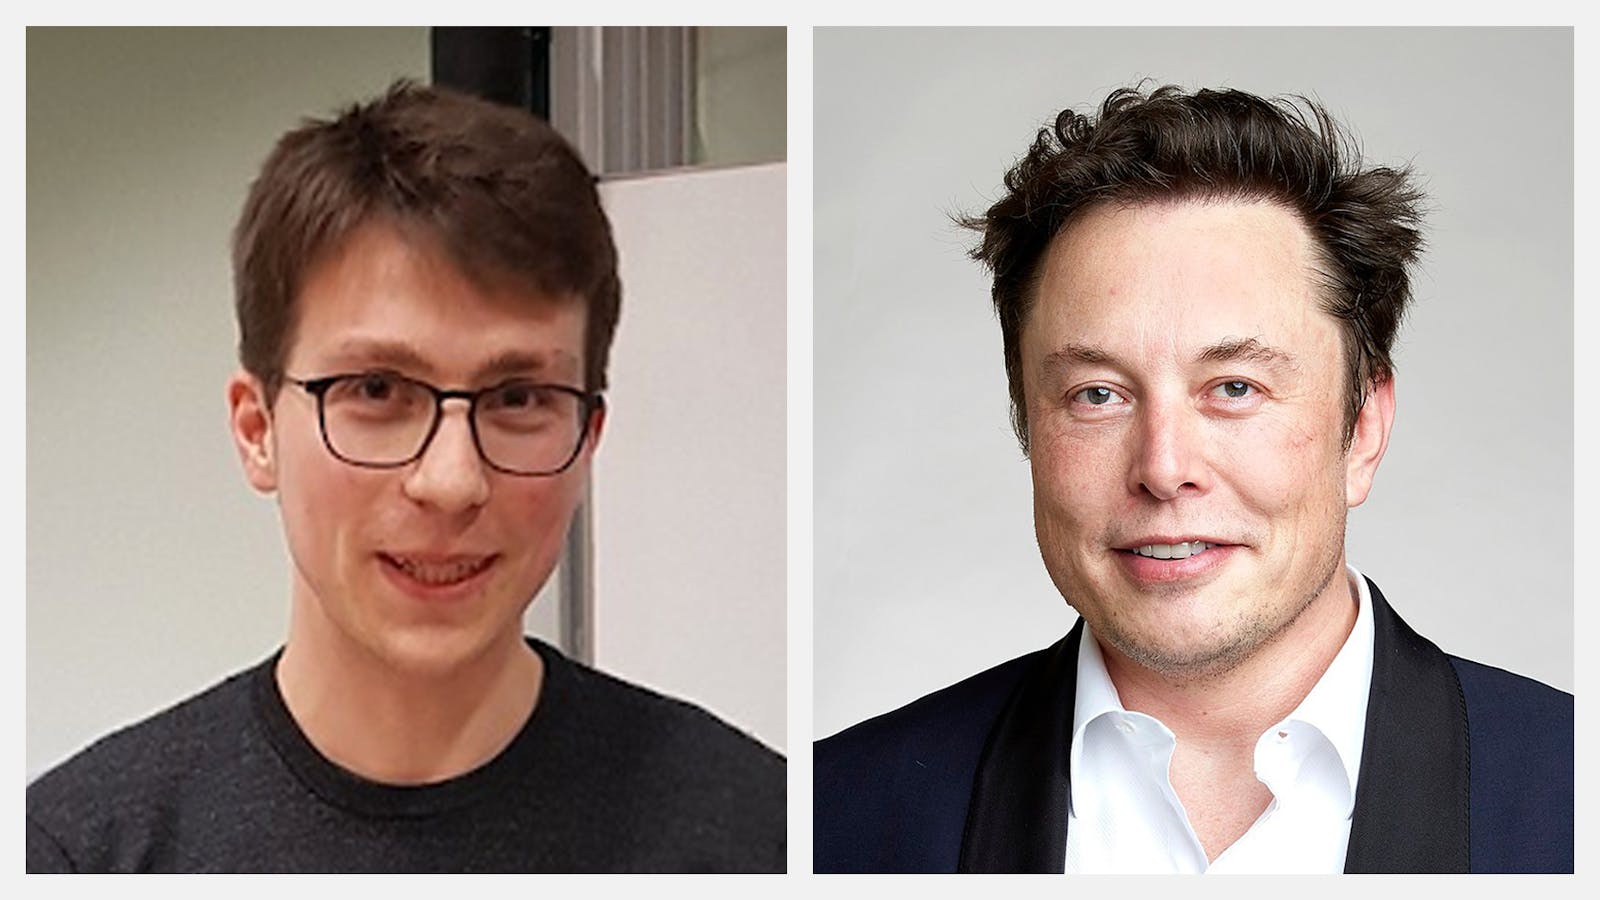 Igor Babuschkin and Elon Musk. Photos via TU Dortmund and Wikimedia.